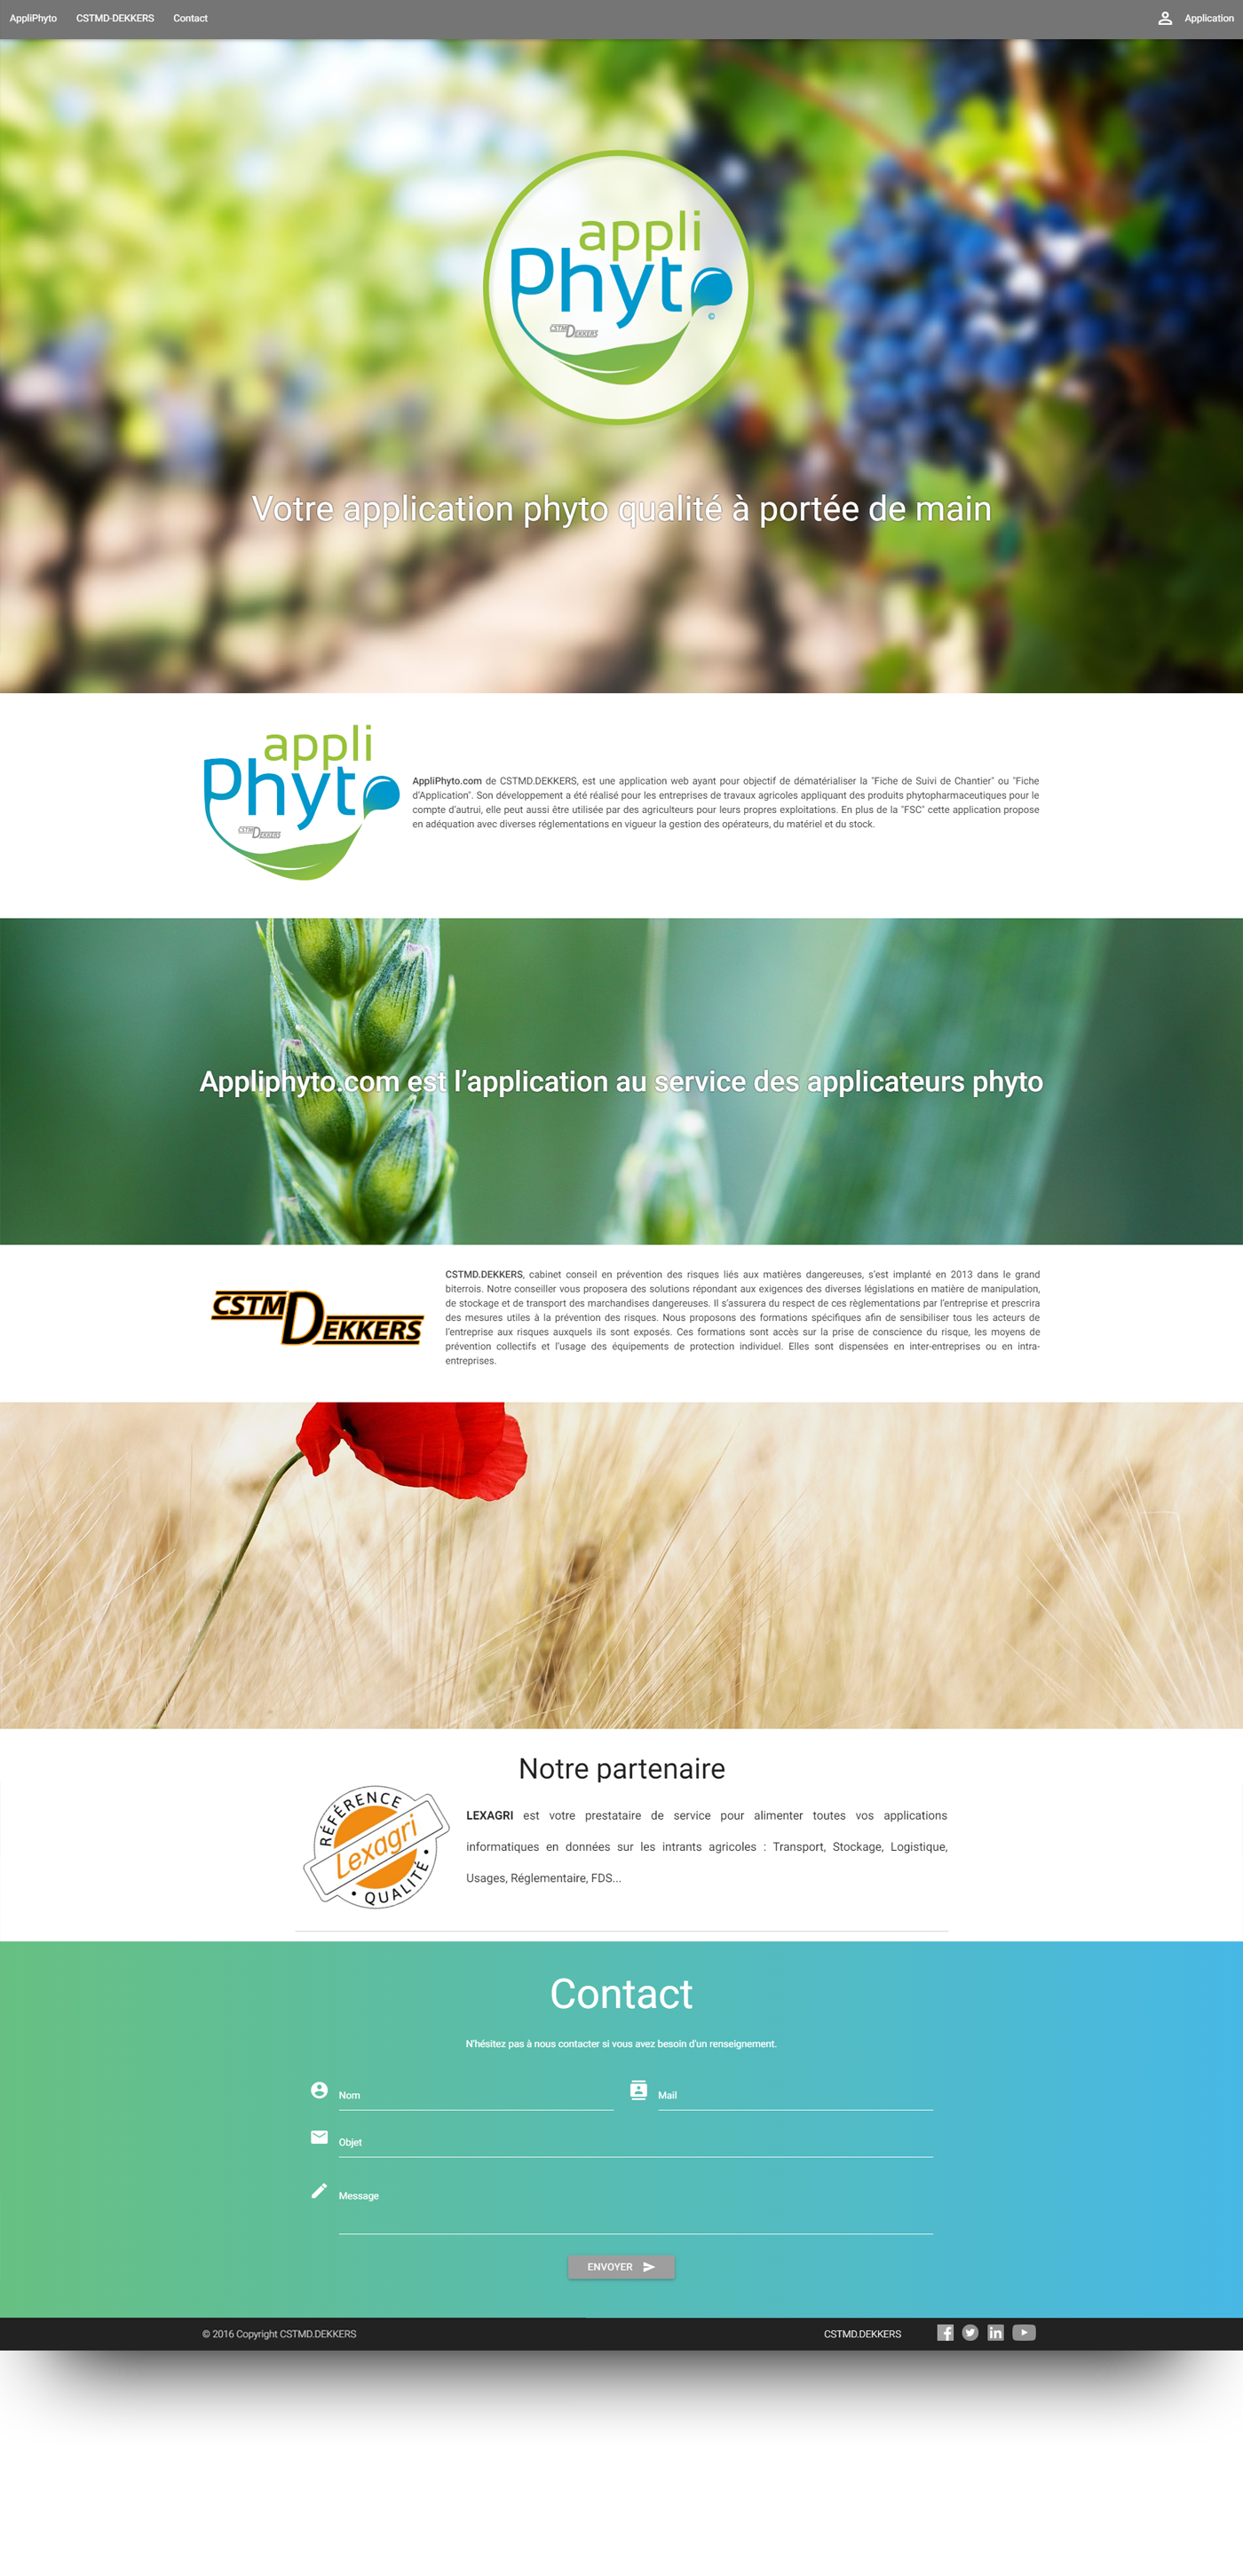 appli-phyto design